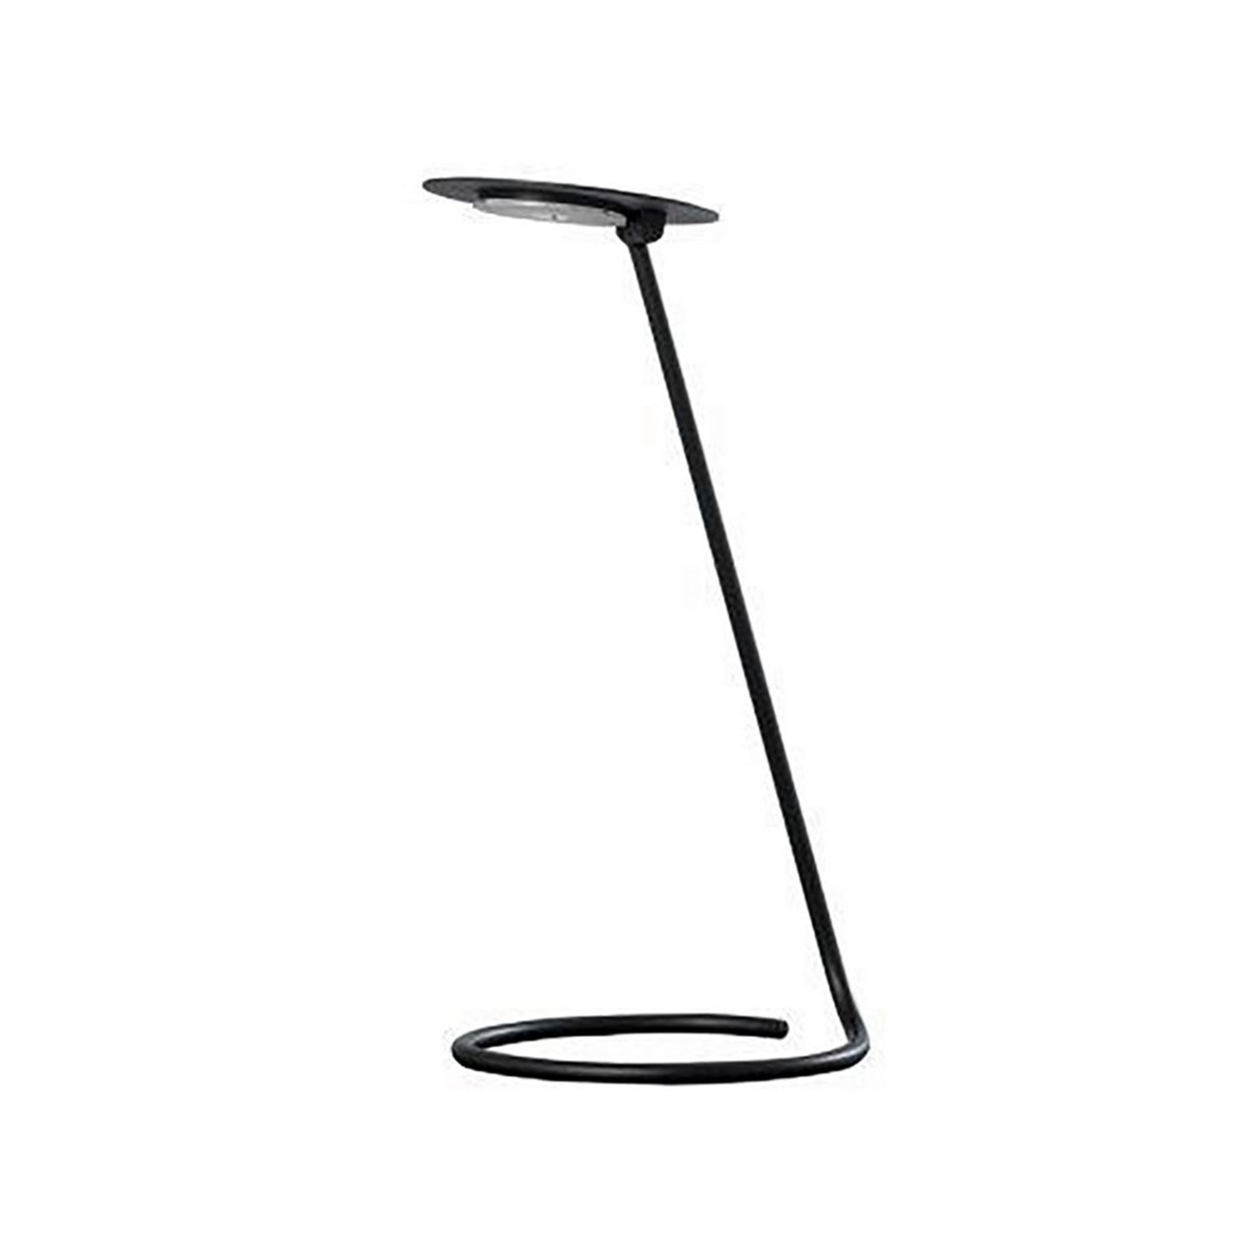 Desk Lamp With Pendulum Style And Flat Saucer Shade, Black- Saltoro Sherpi